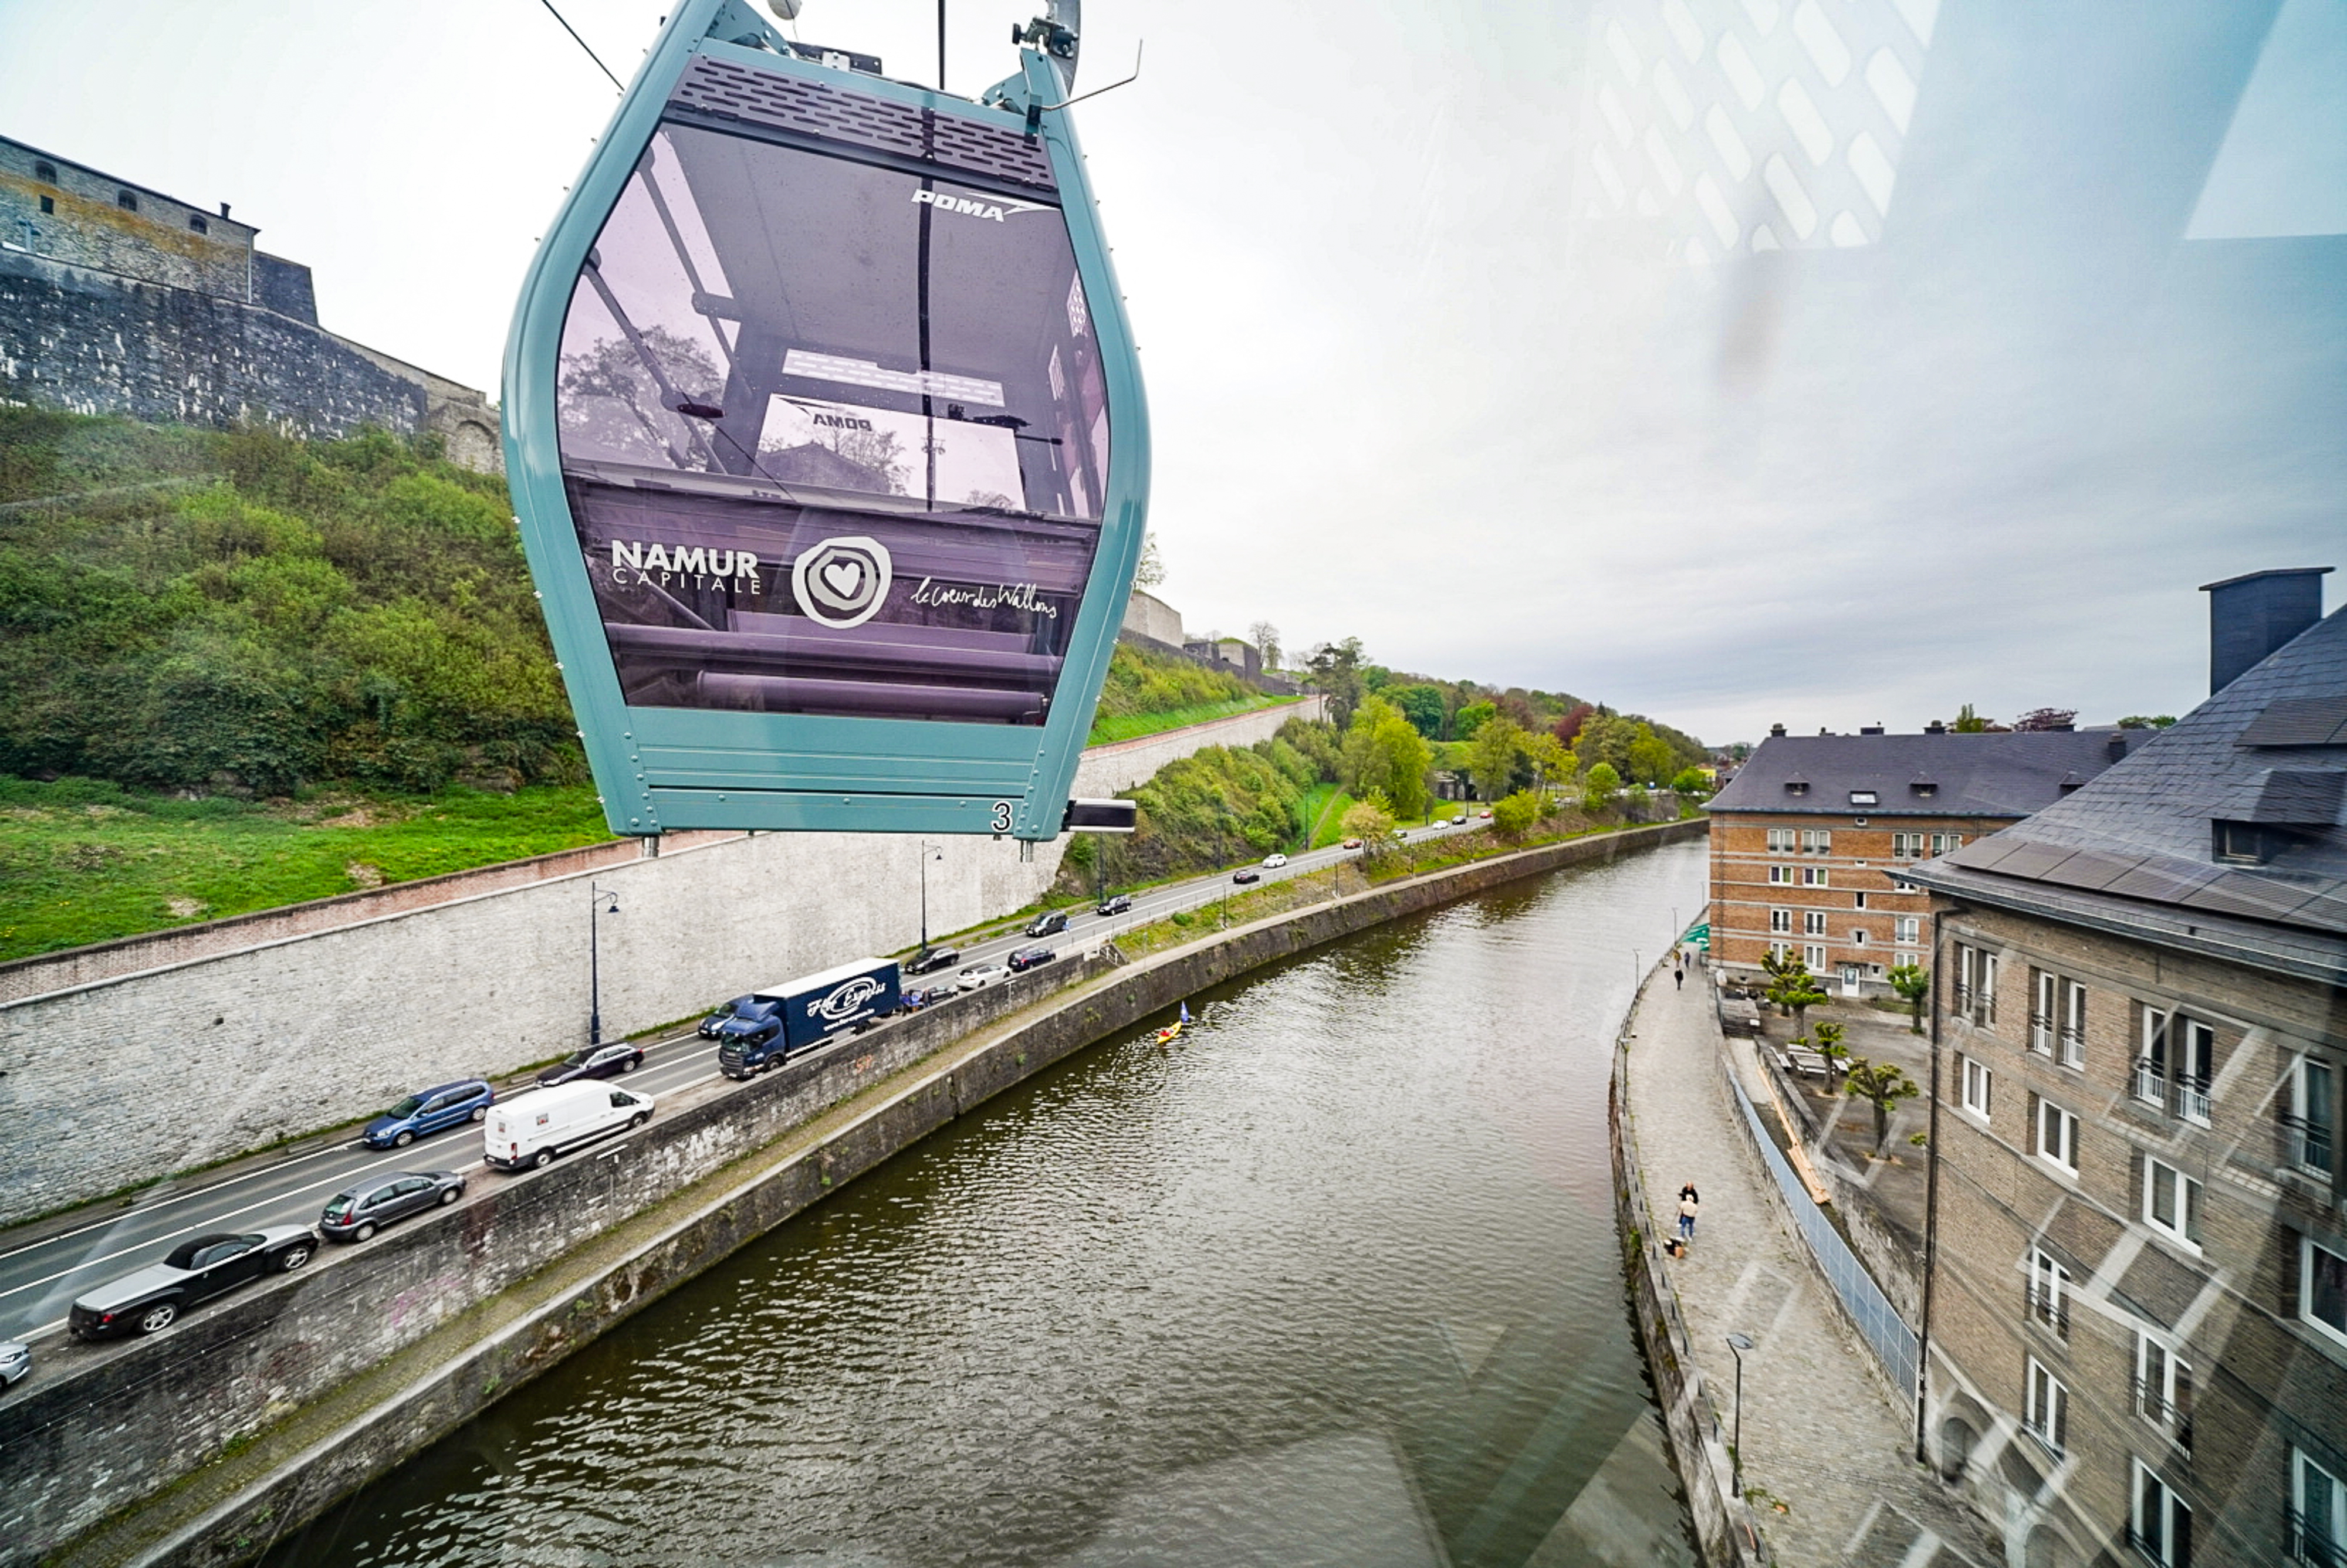 Namur has new cable car